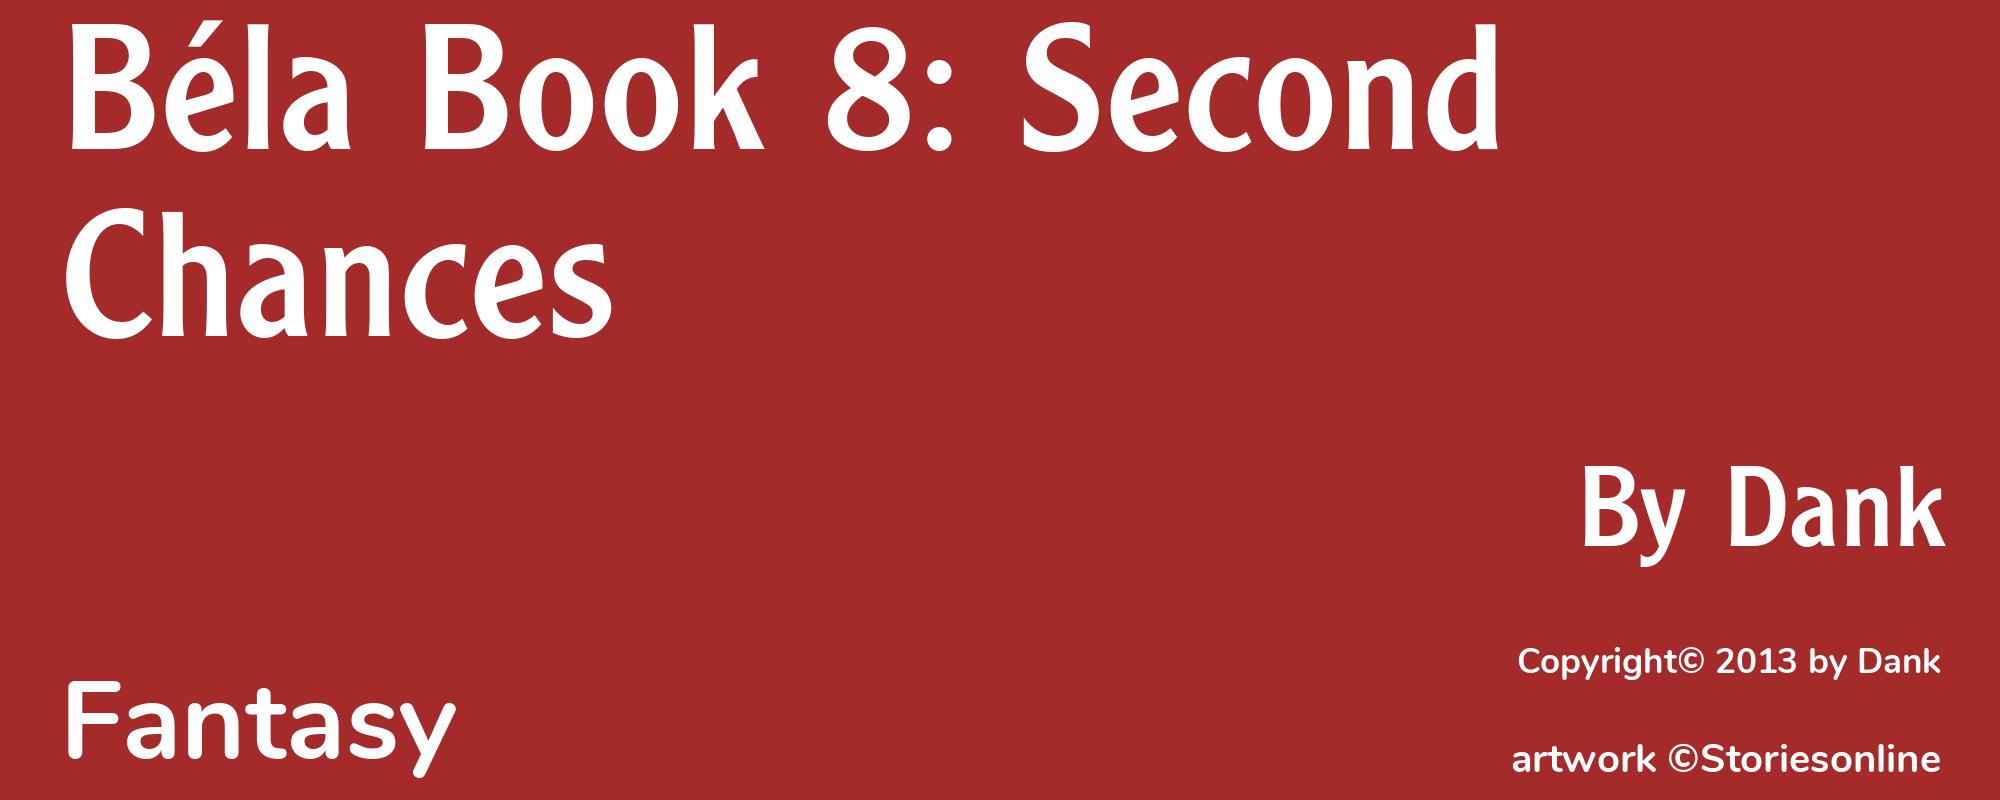 Béla Book 8: Second Chances - Cover